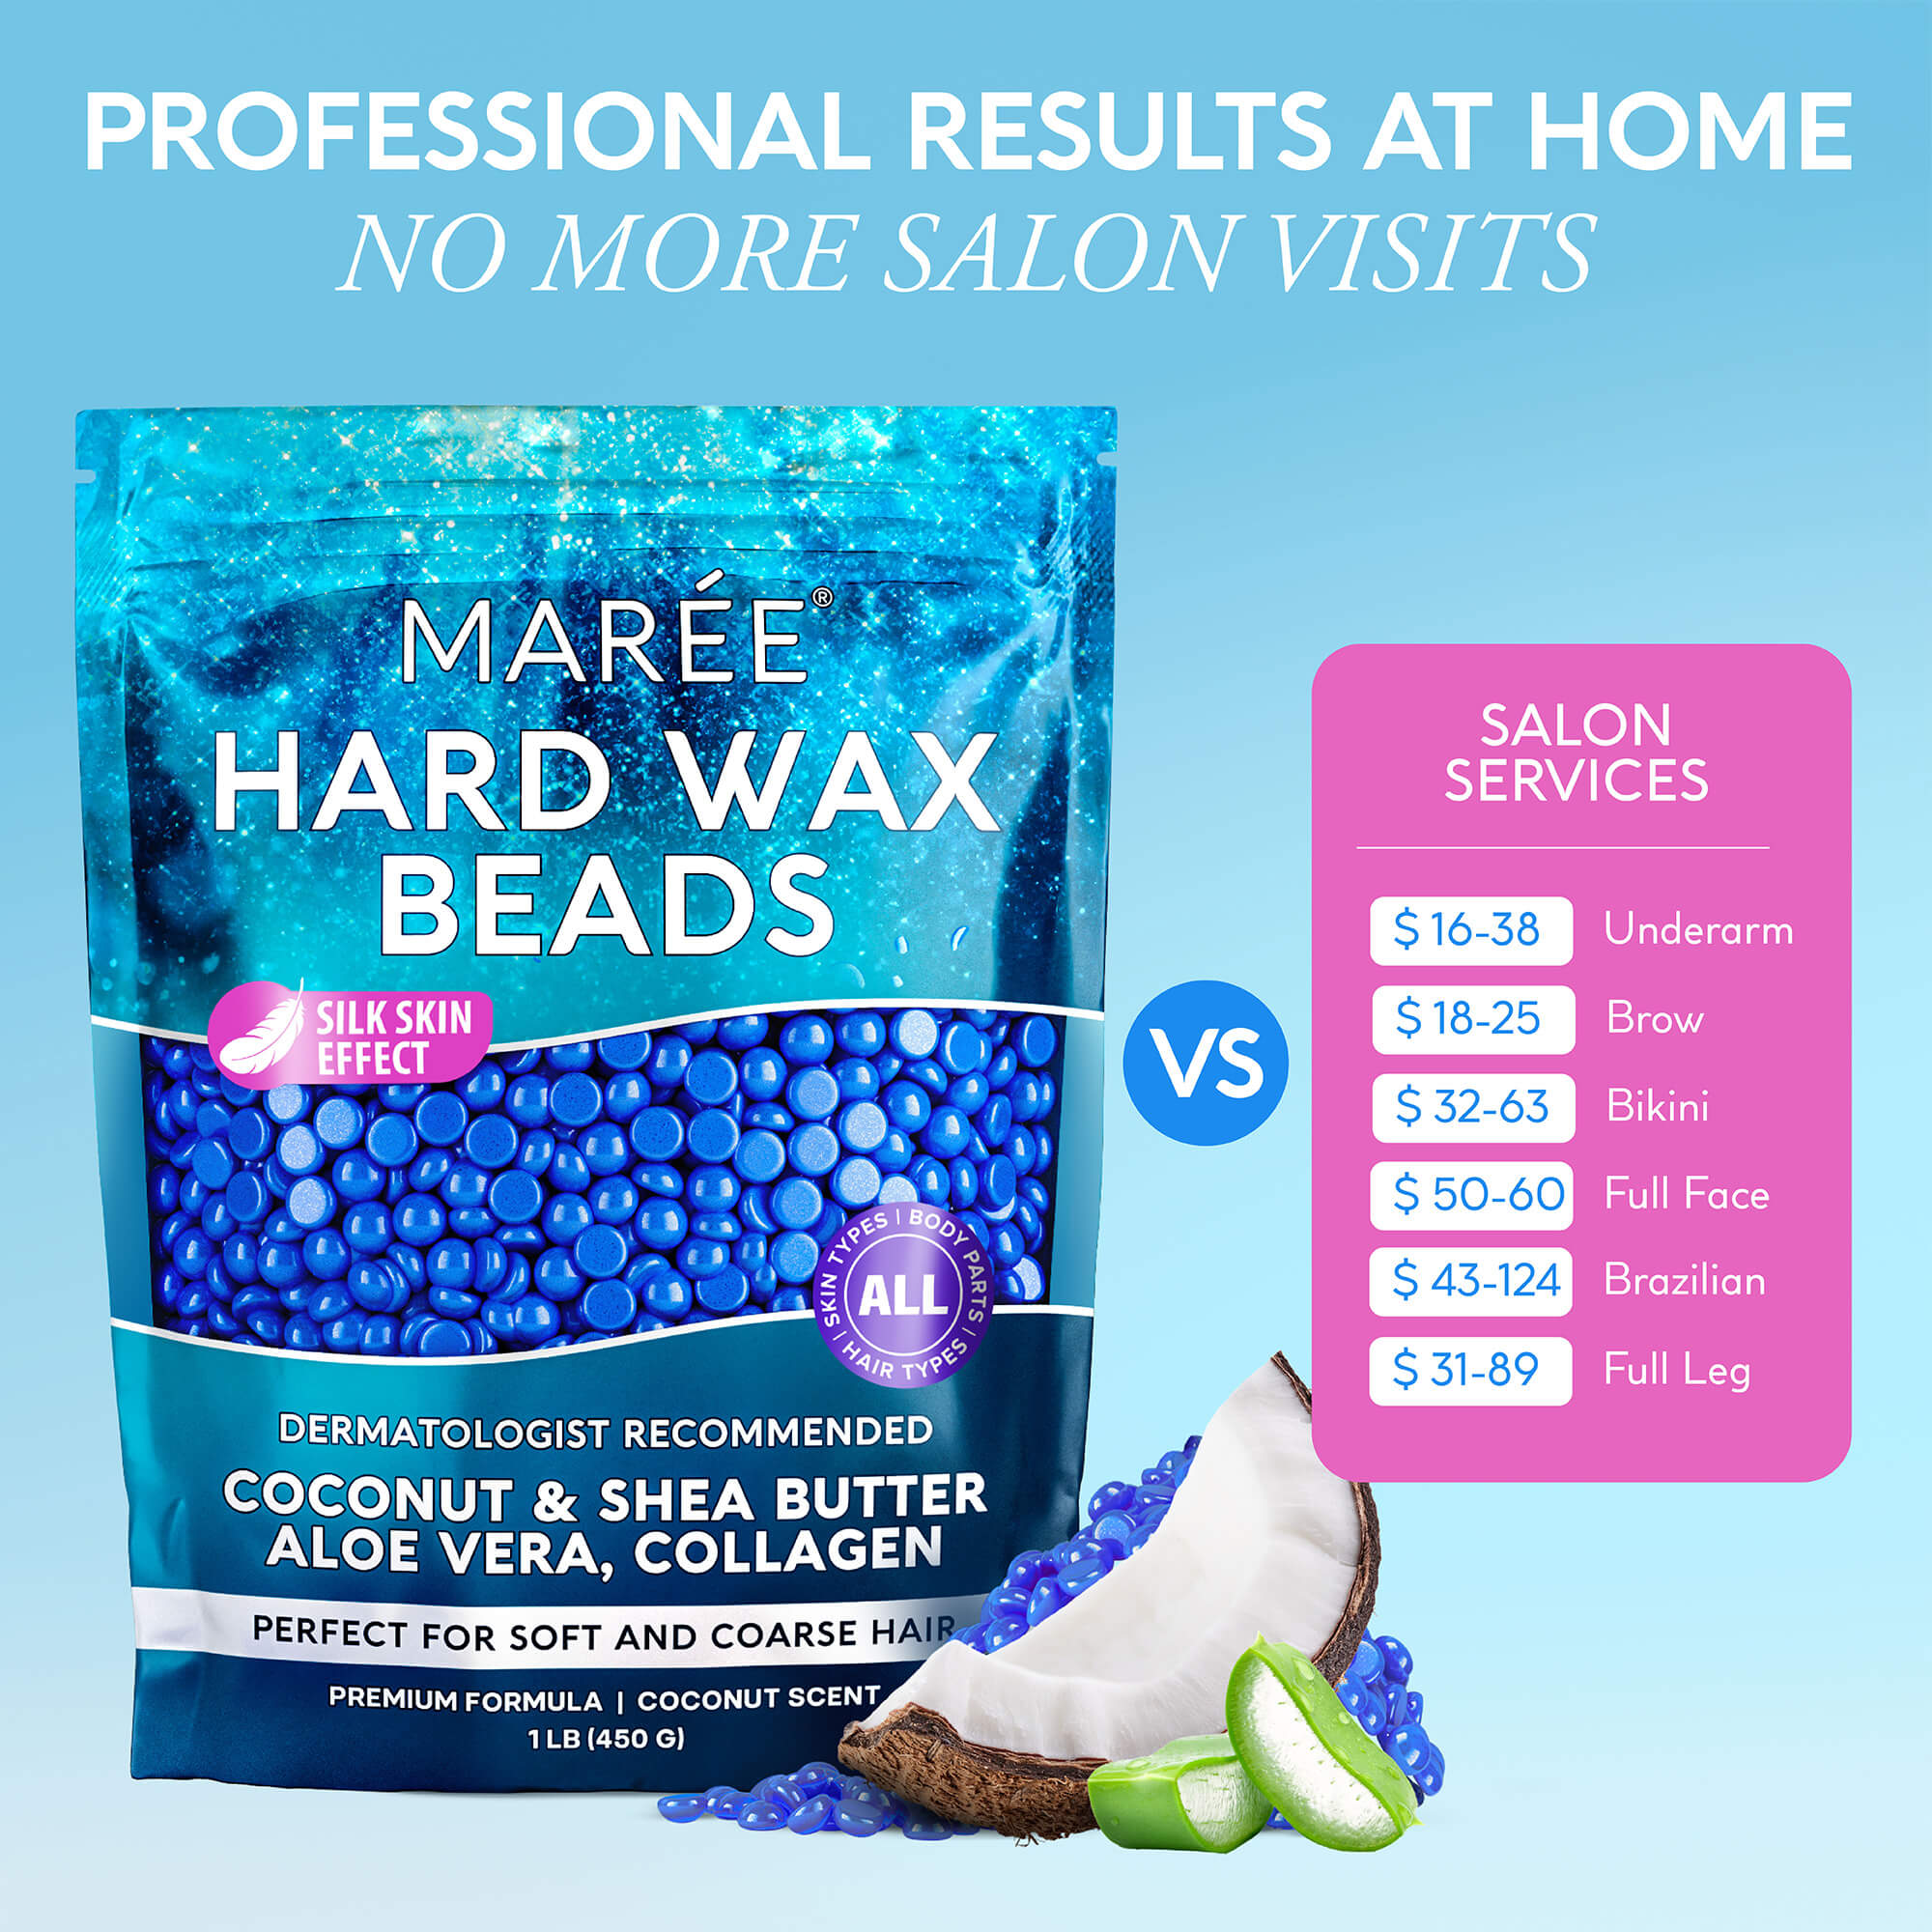 Maree Hard Wax Beads Product